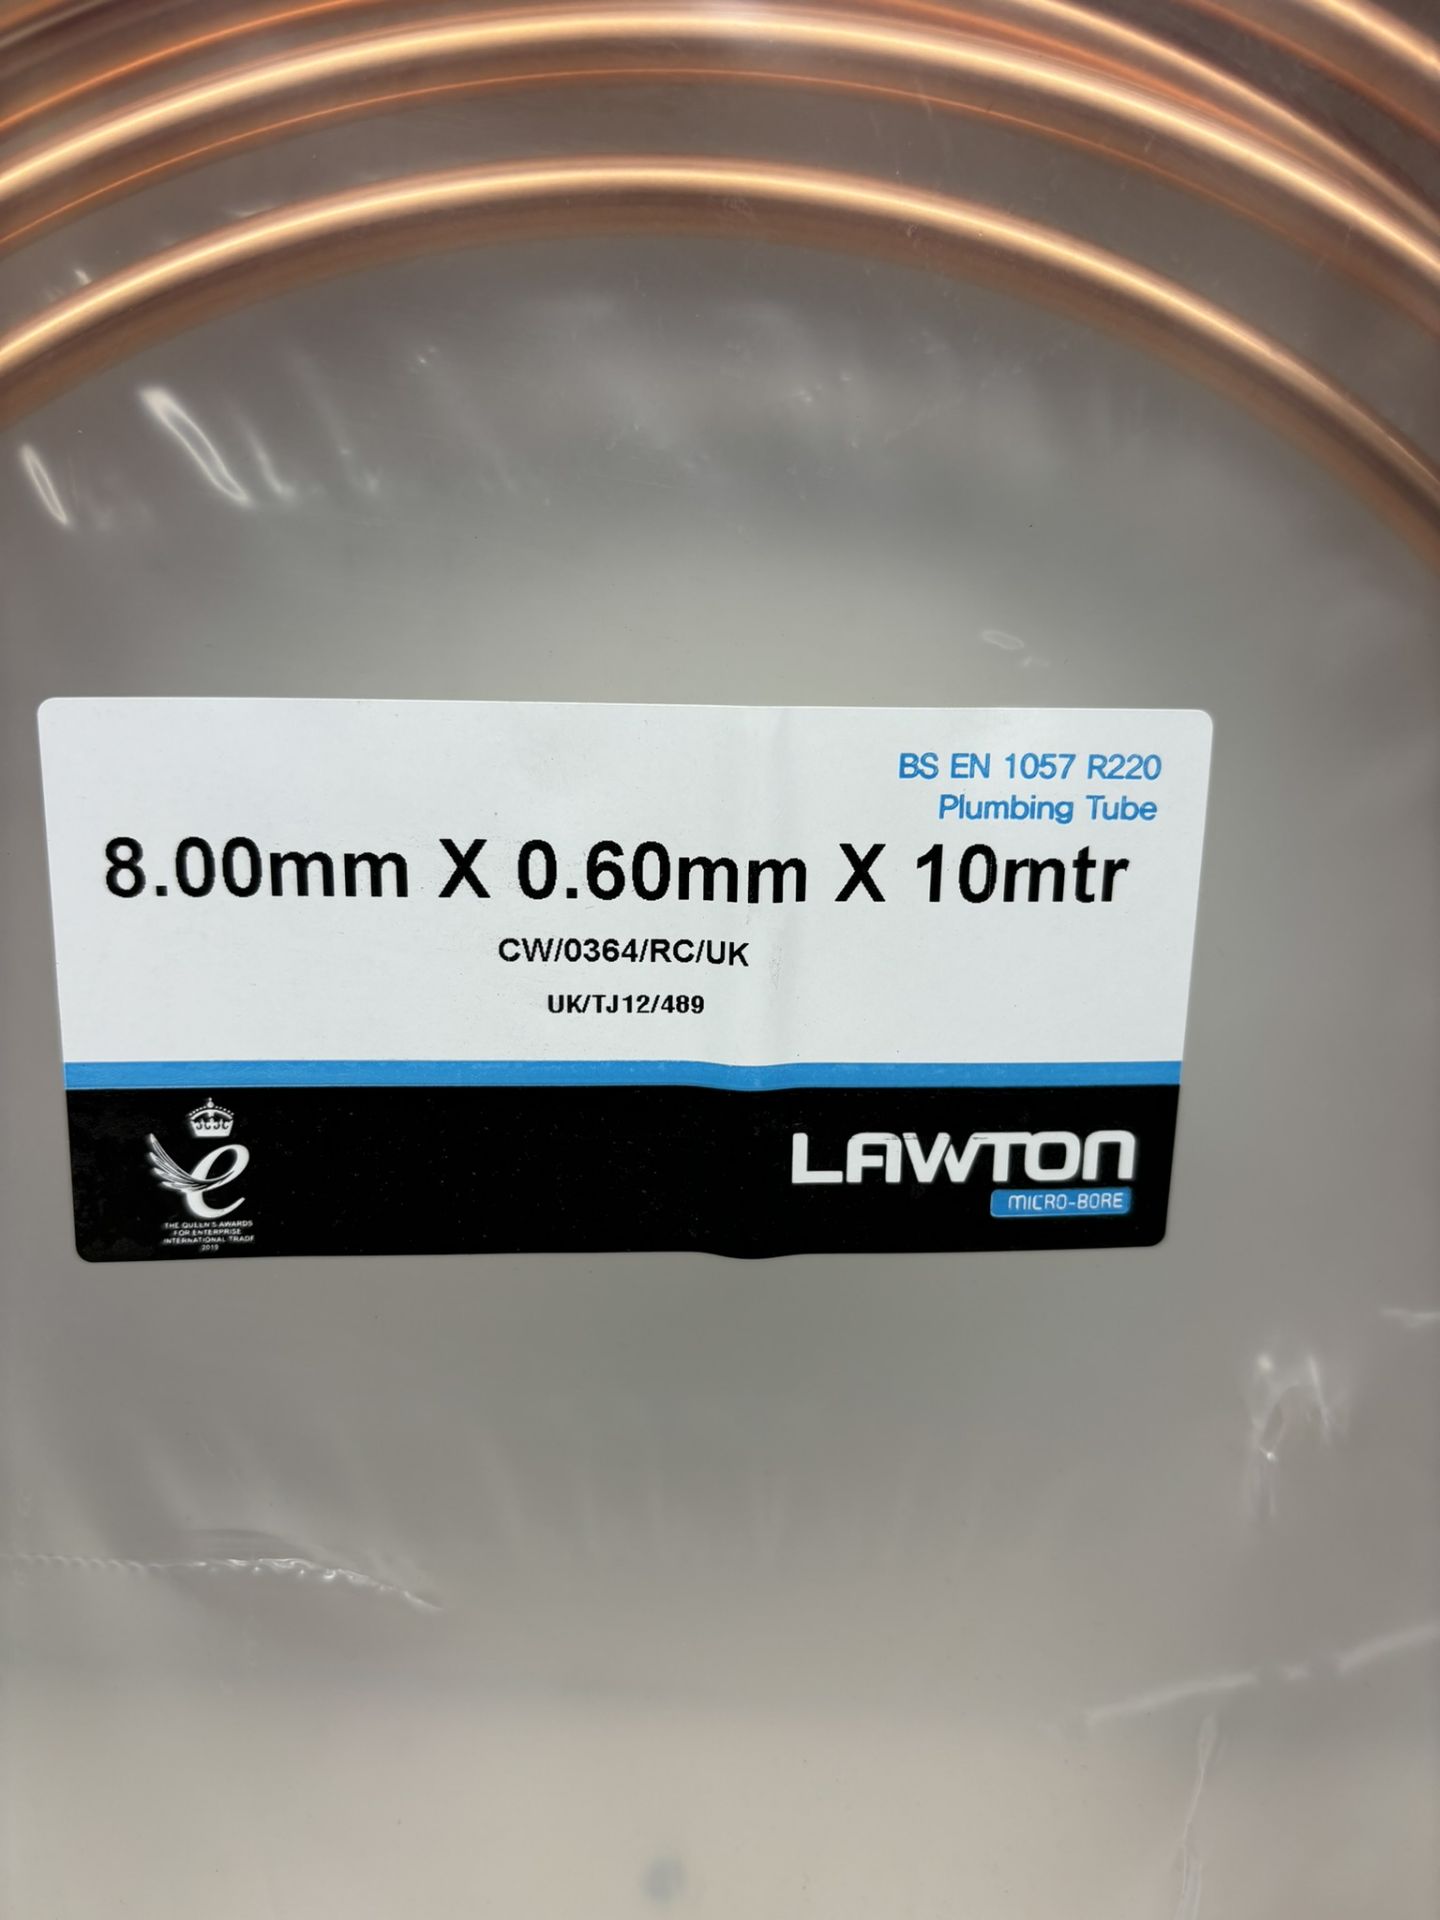 5 x Lawton 8.00mm x 0.60mm x 10Mtr Copper Plumbing Tube Coils - Image 9 of 9